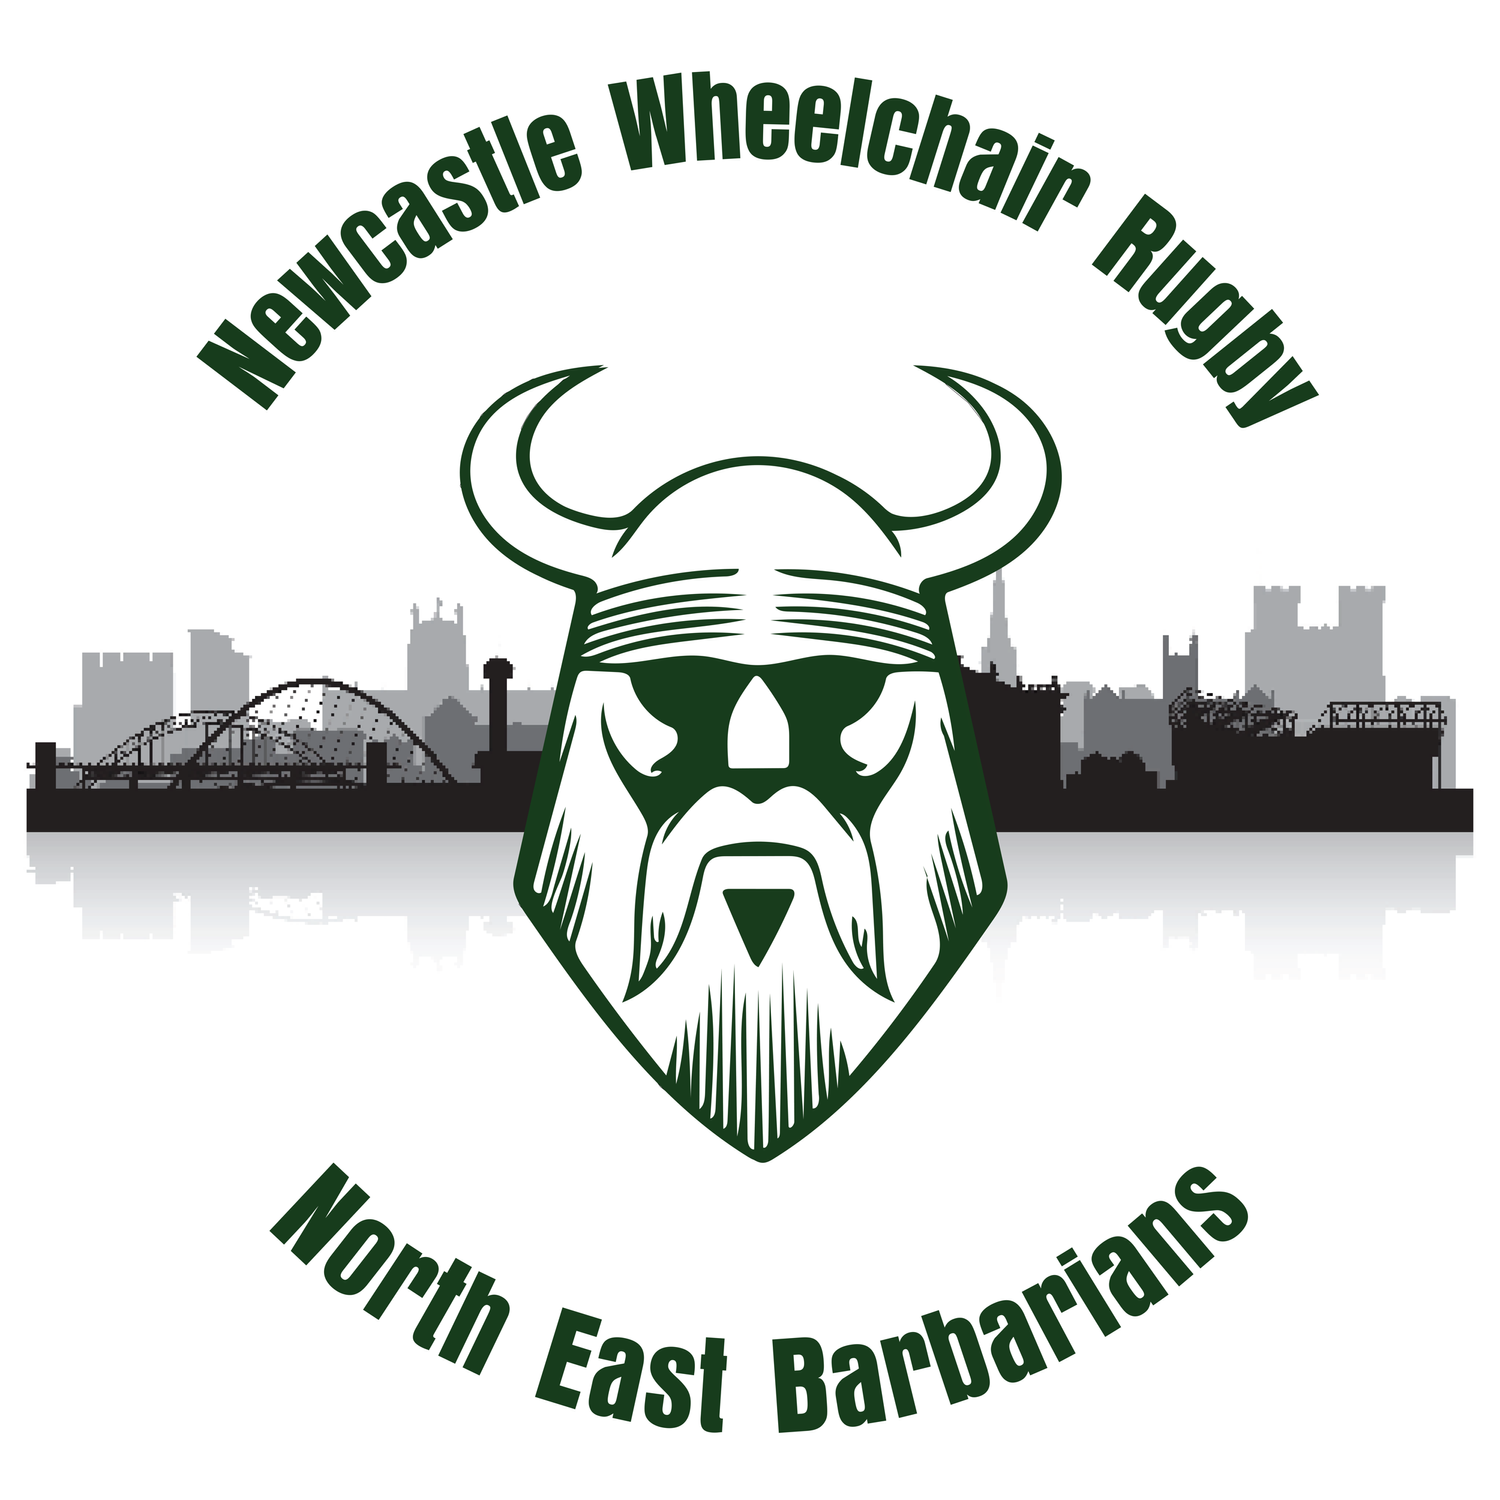 Newcastle Wheelchair Rugby Club